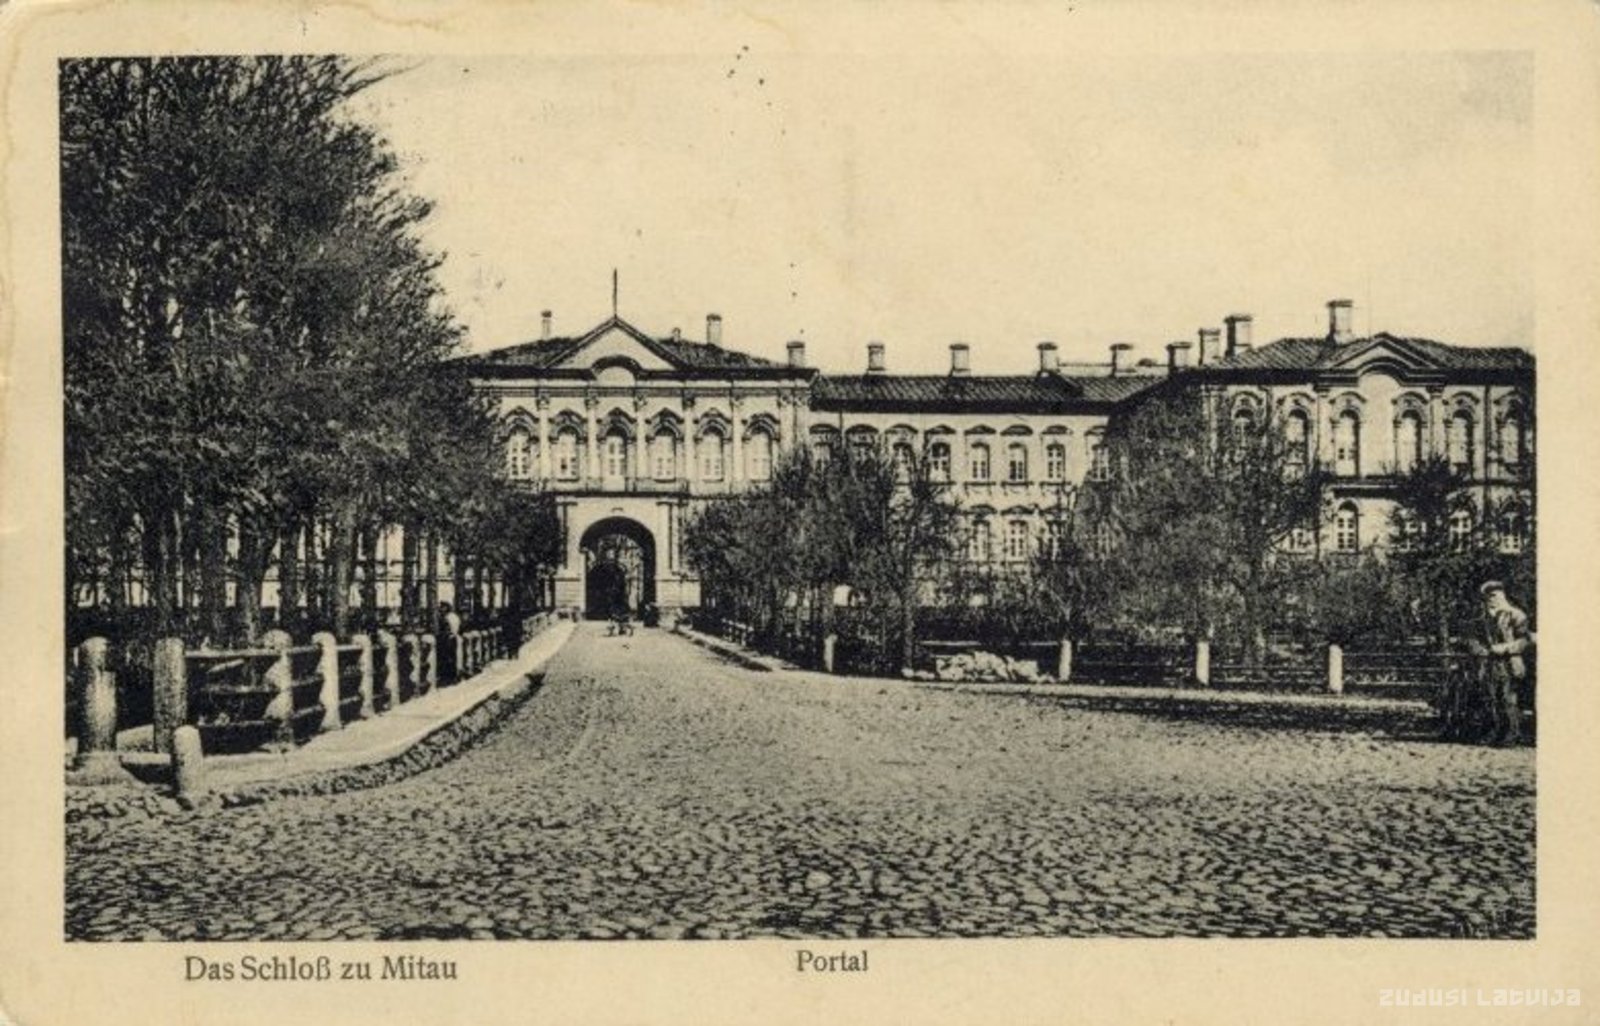 The main entrance of Jelgava Palace, Das Schloss zu Mitau. Portal